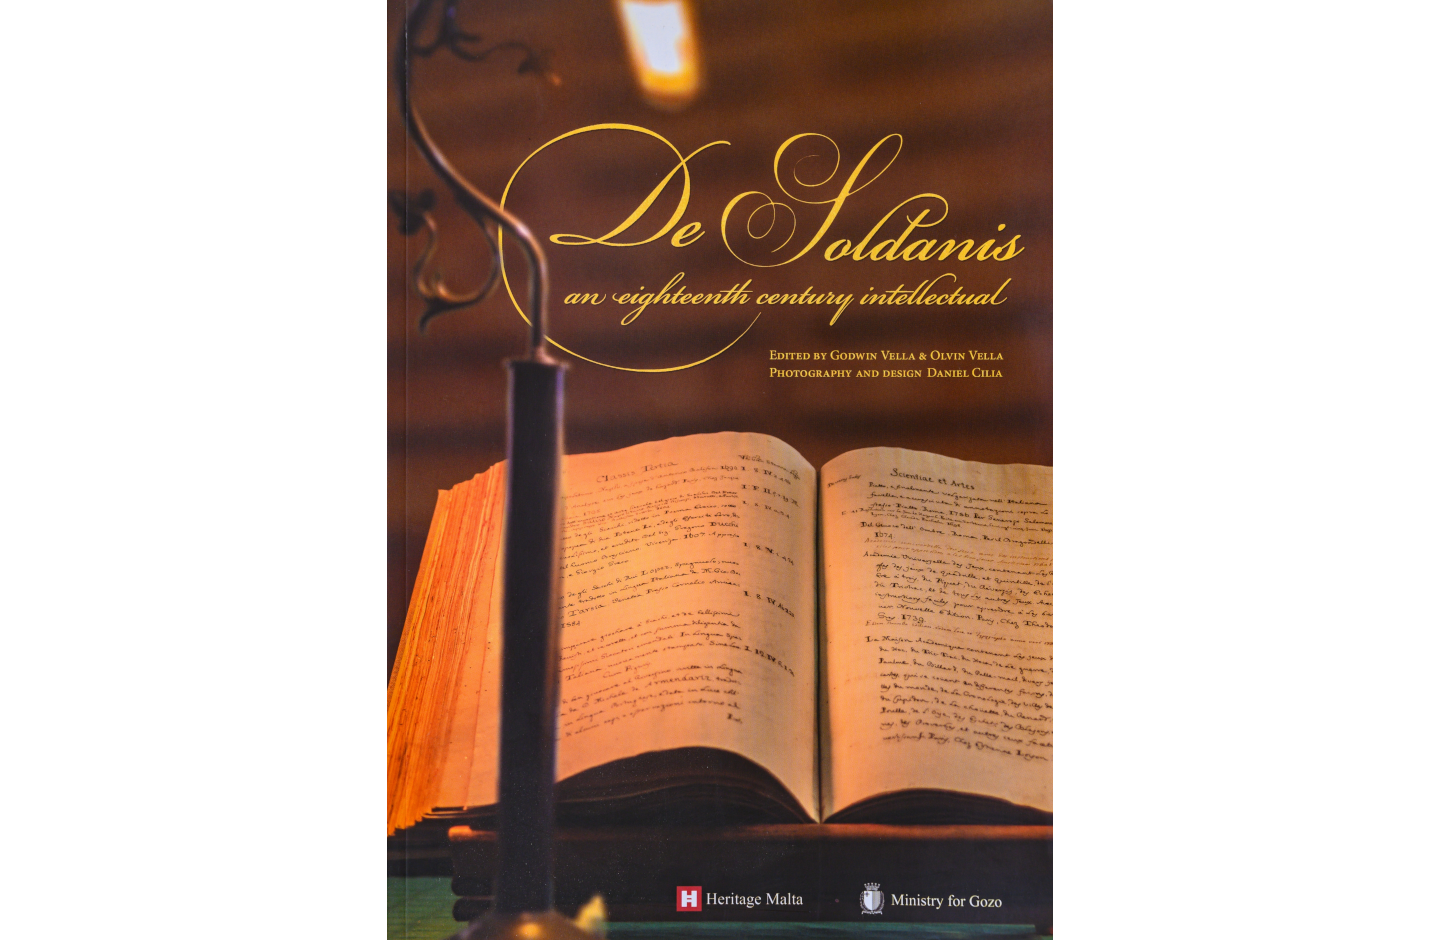 De Soldanis – An eighteenth century intellectual